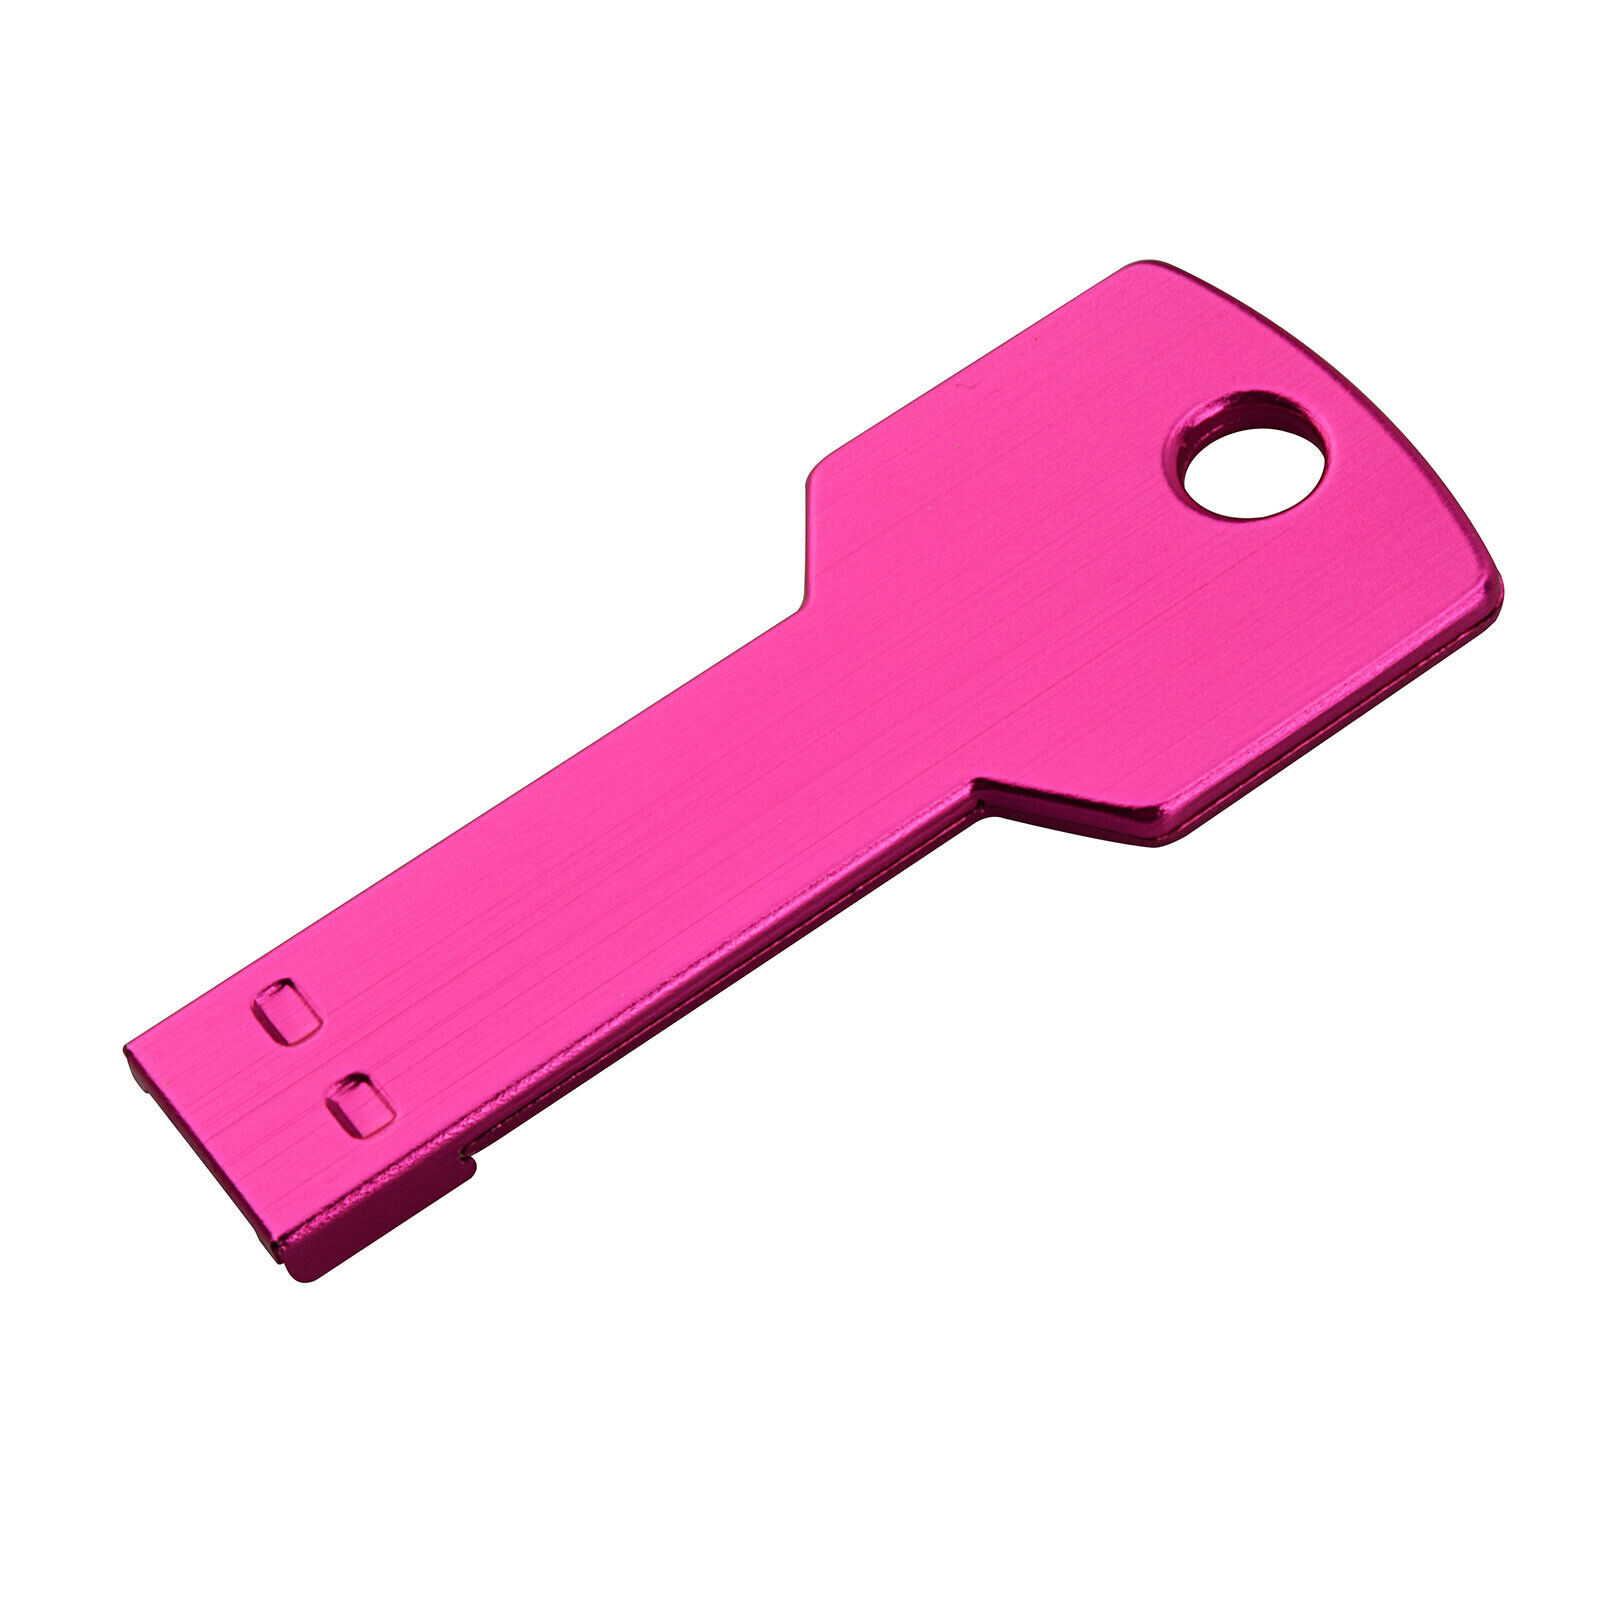 5pcs/lot 1GB-32GB Metal Key Memory Stick USB 2.0 Flash Pen Drive Thumb U Disk US Kootion Does Not Apply - фотография #7